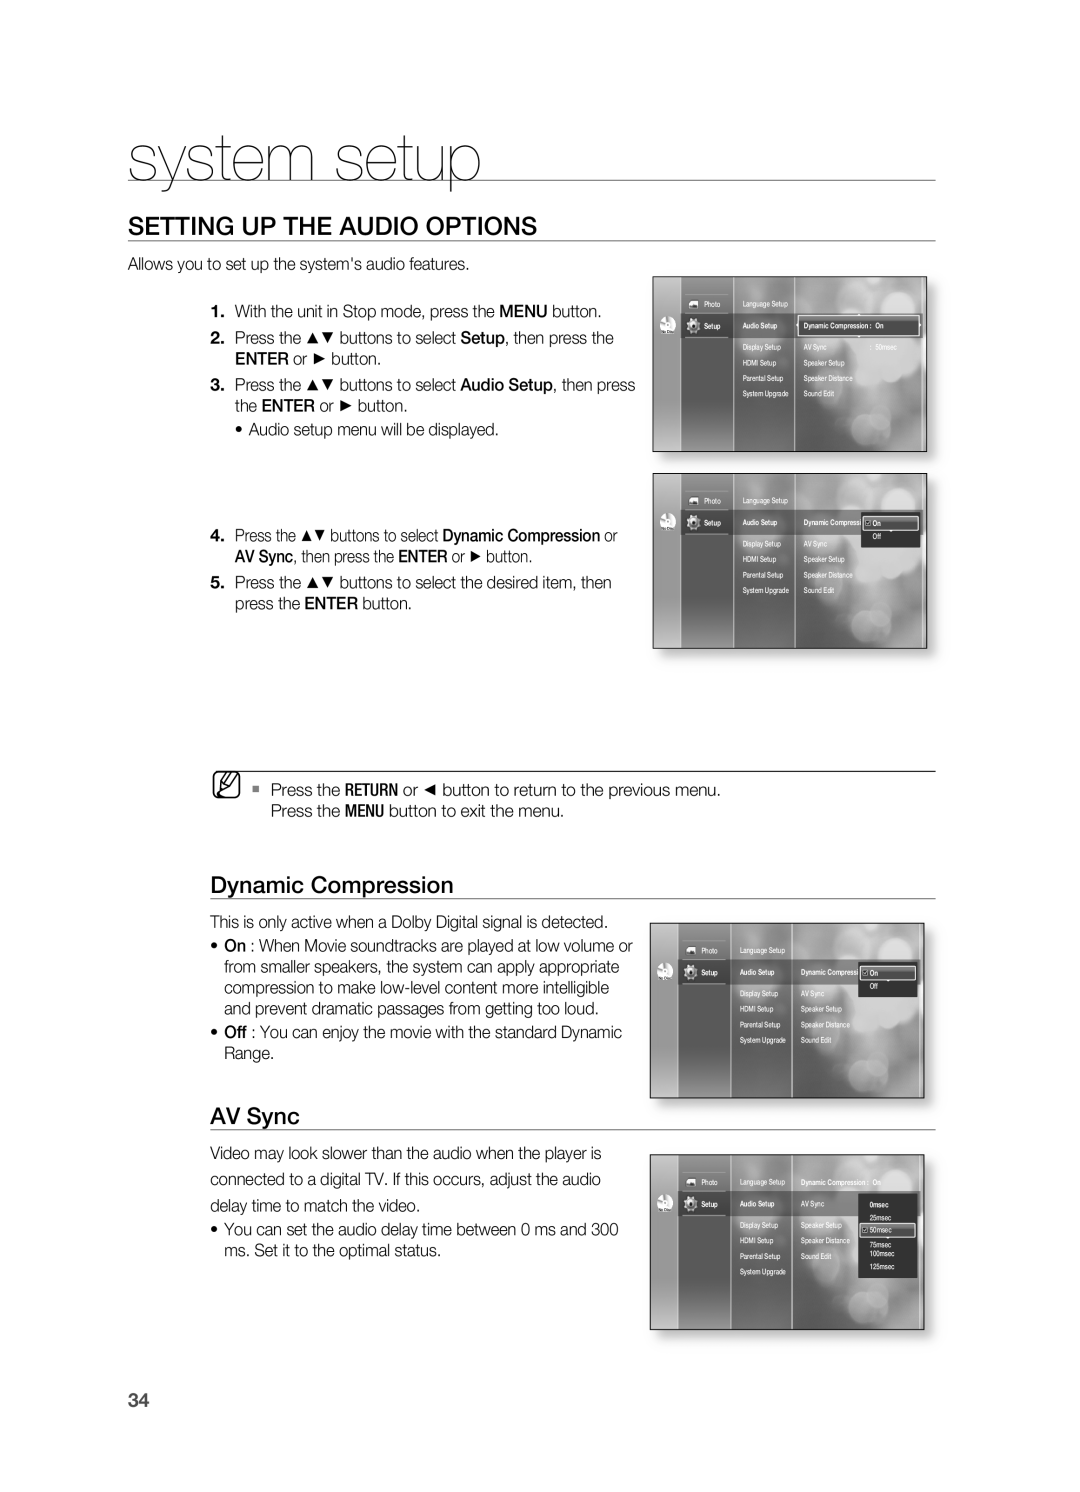 Samsung HT-BD2 manual Setting Up The Audio Options, Dynamic Compression, AV Sync, system setup, Range 